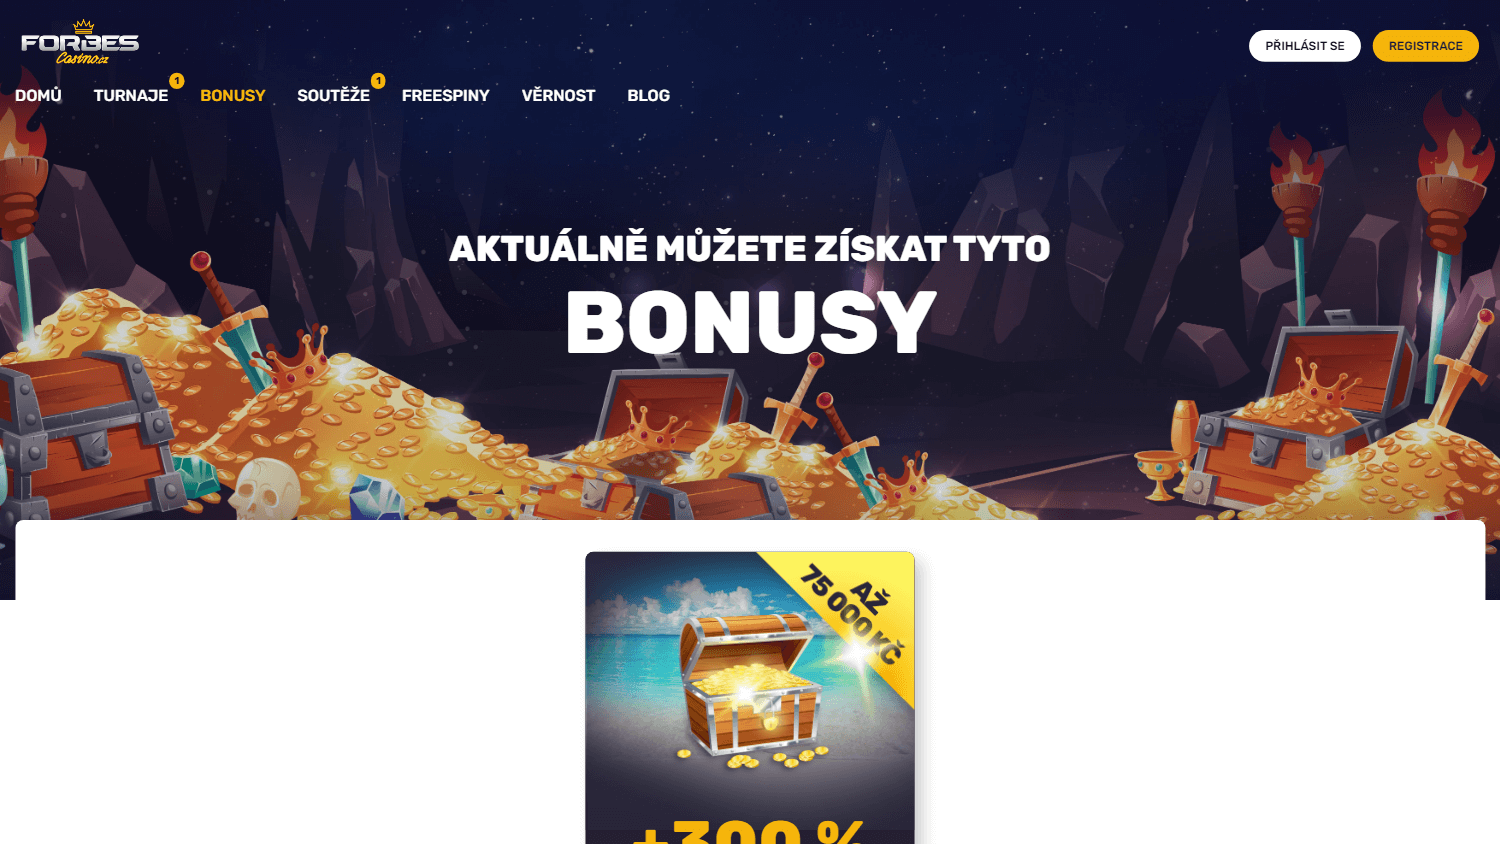 forbes_casino_promotions_desktop